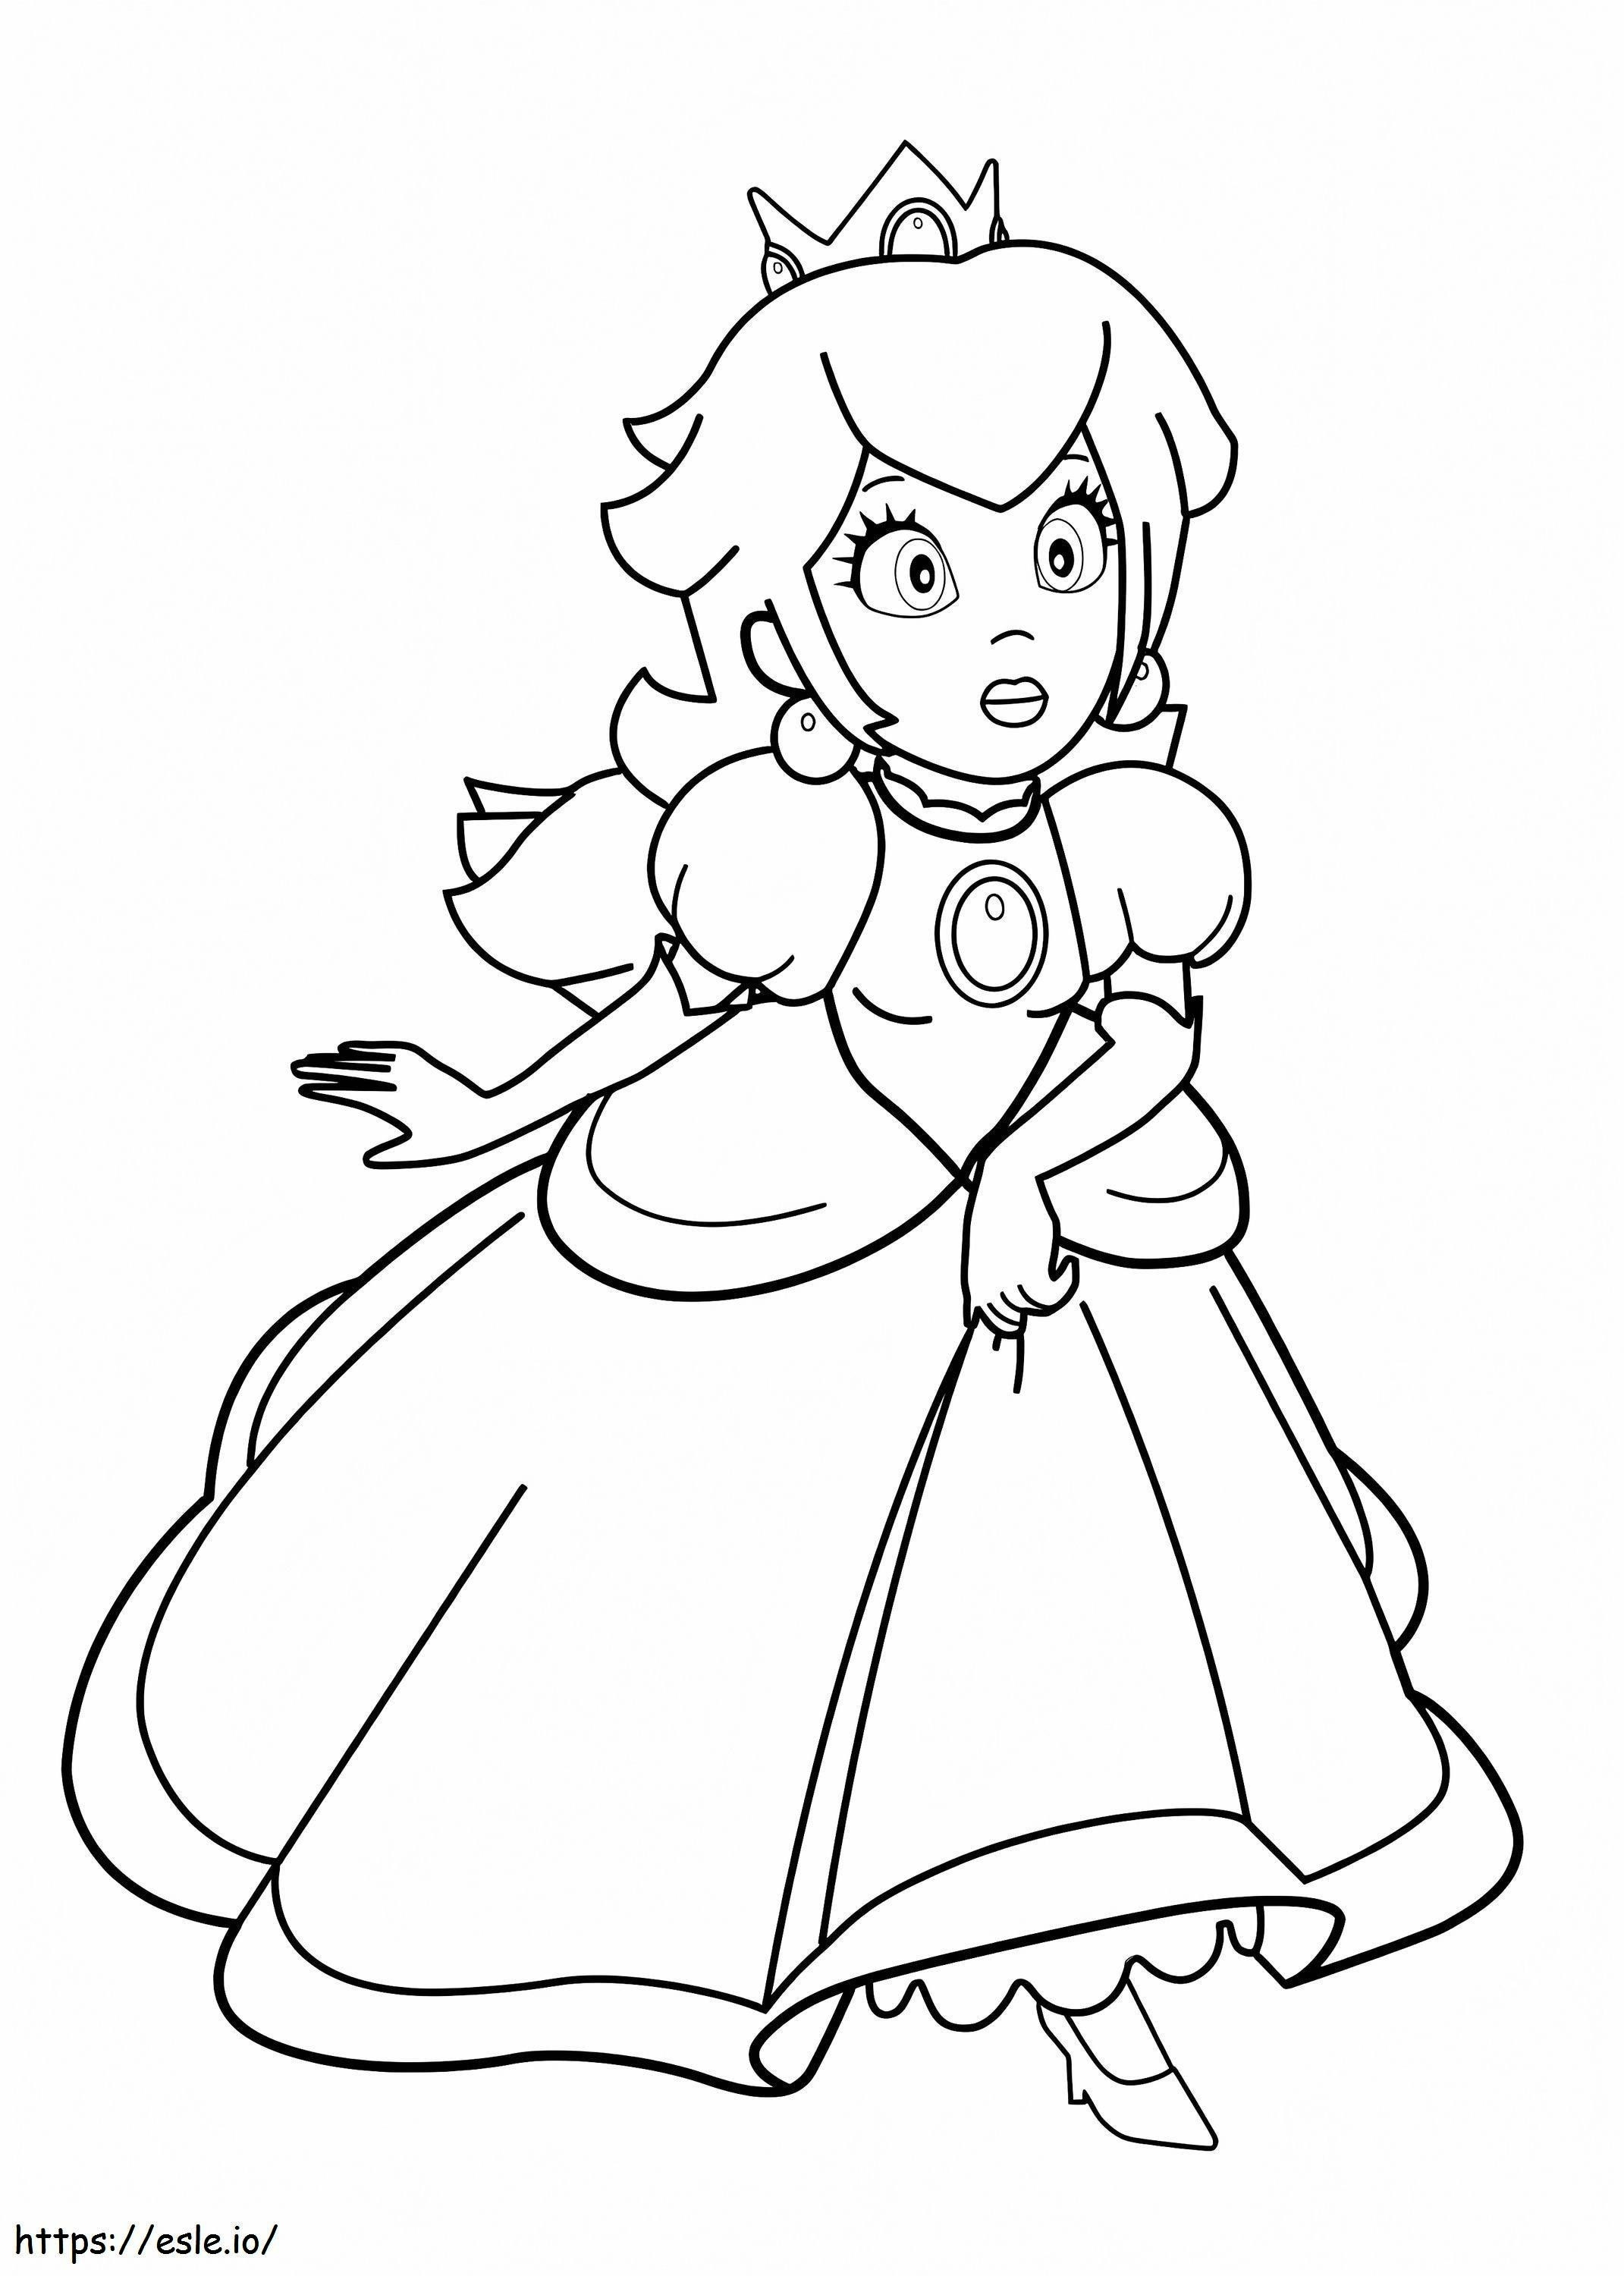 Cute Princess Peach coloring page